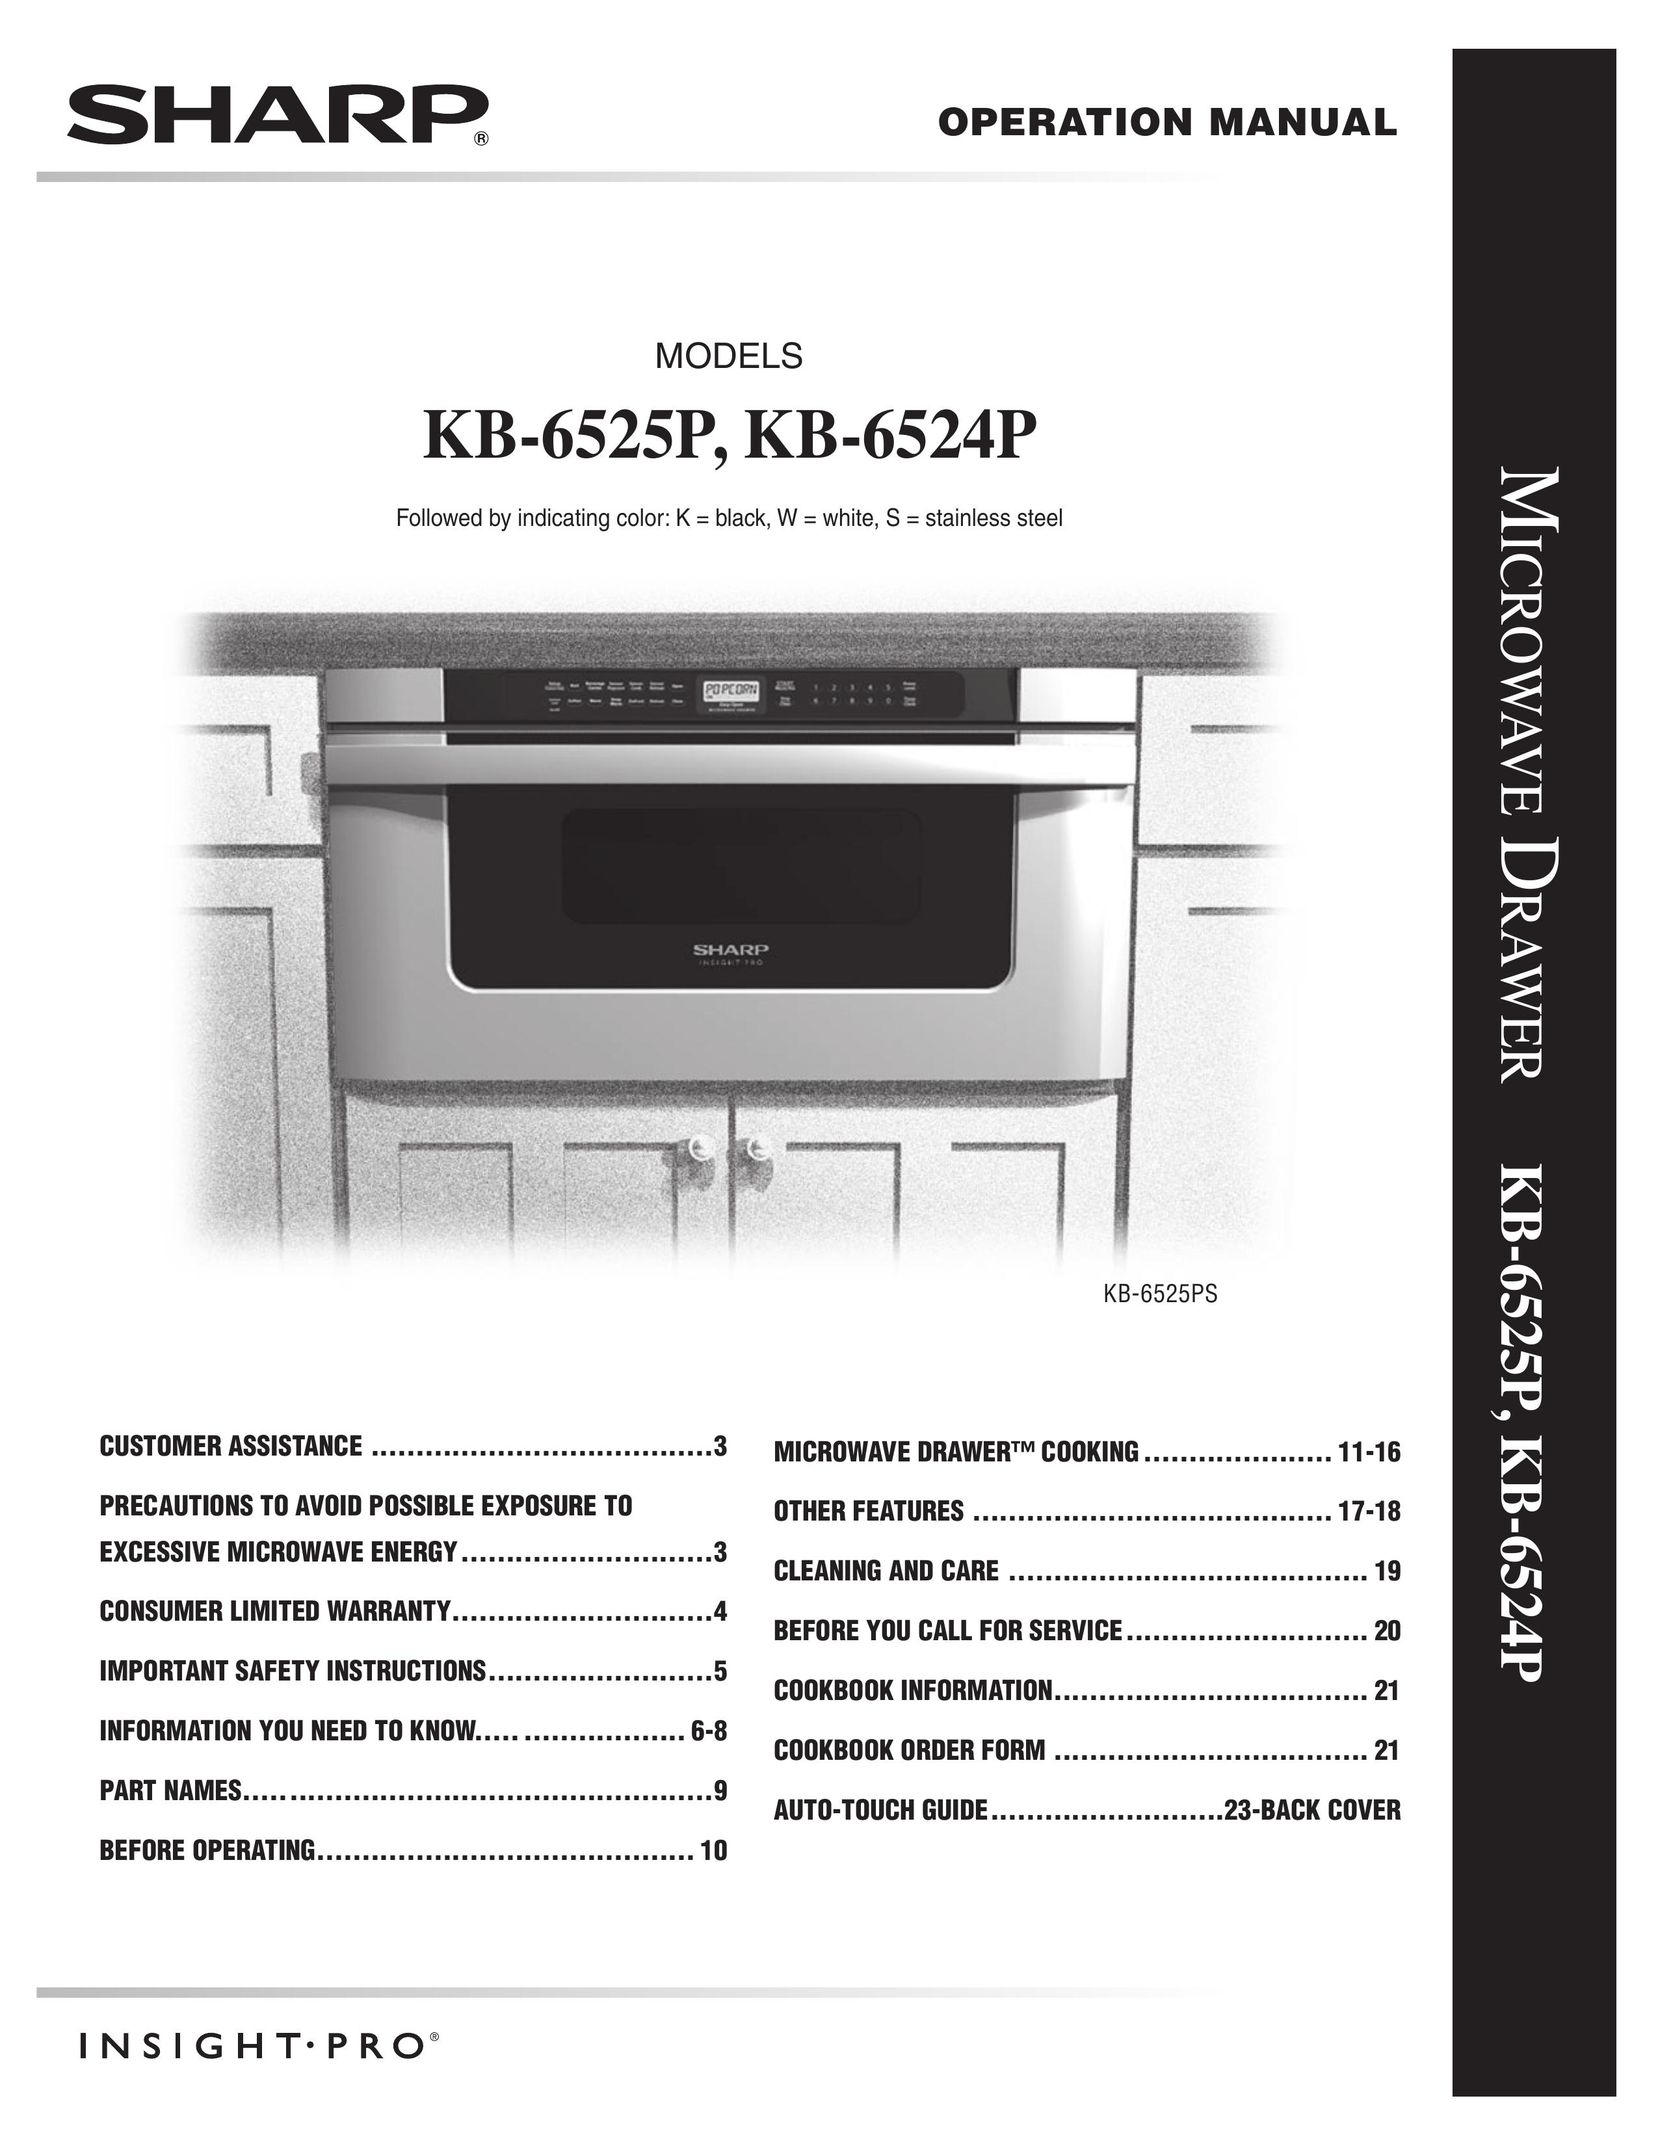 Sharp KB6524PK Microwave Oven User Manual